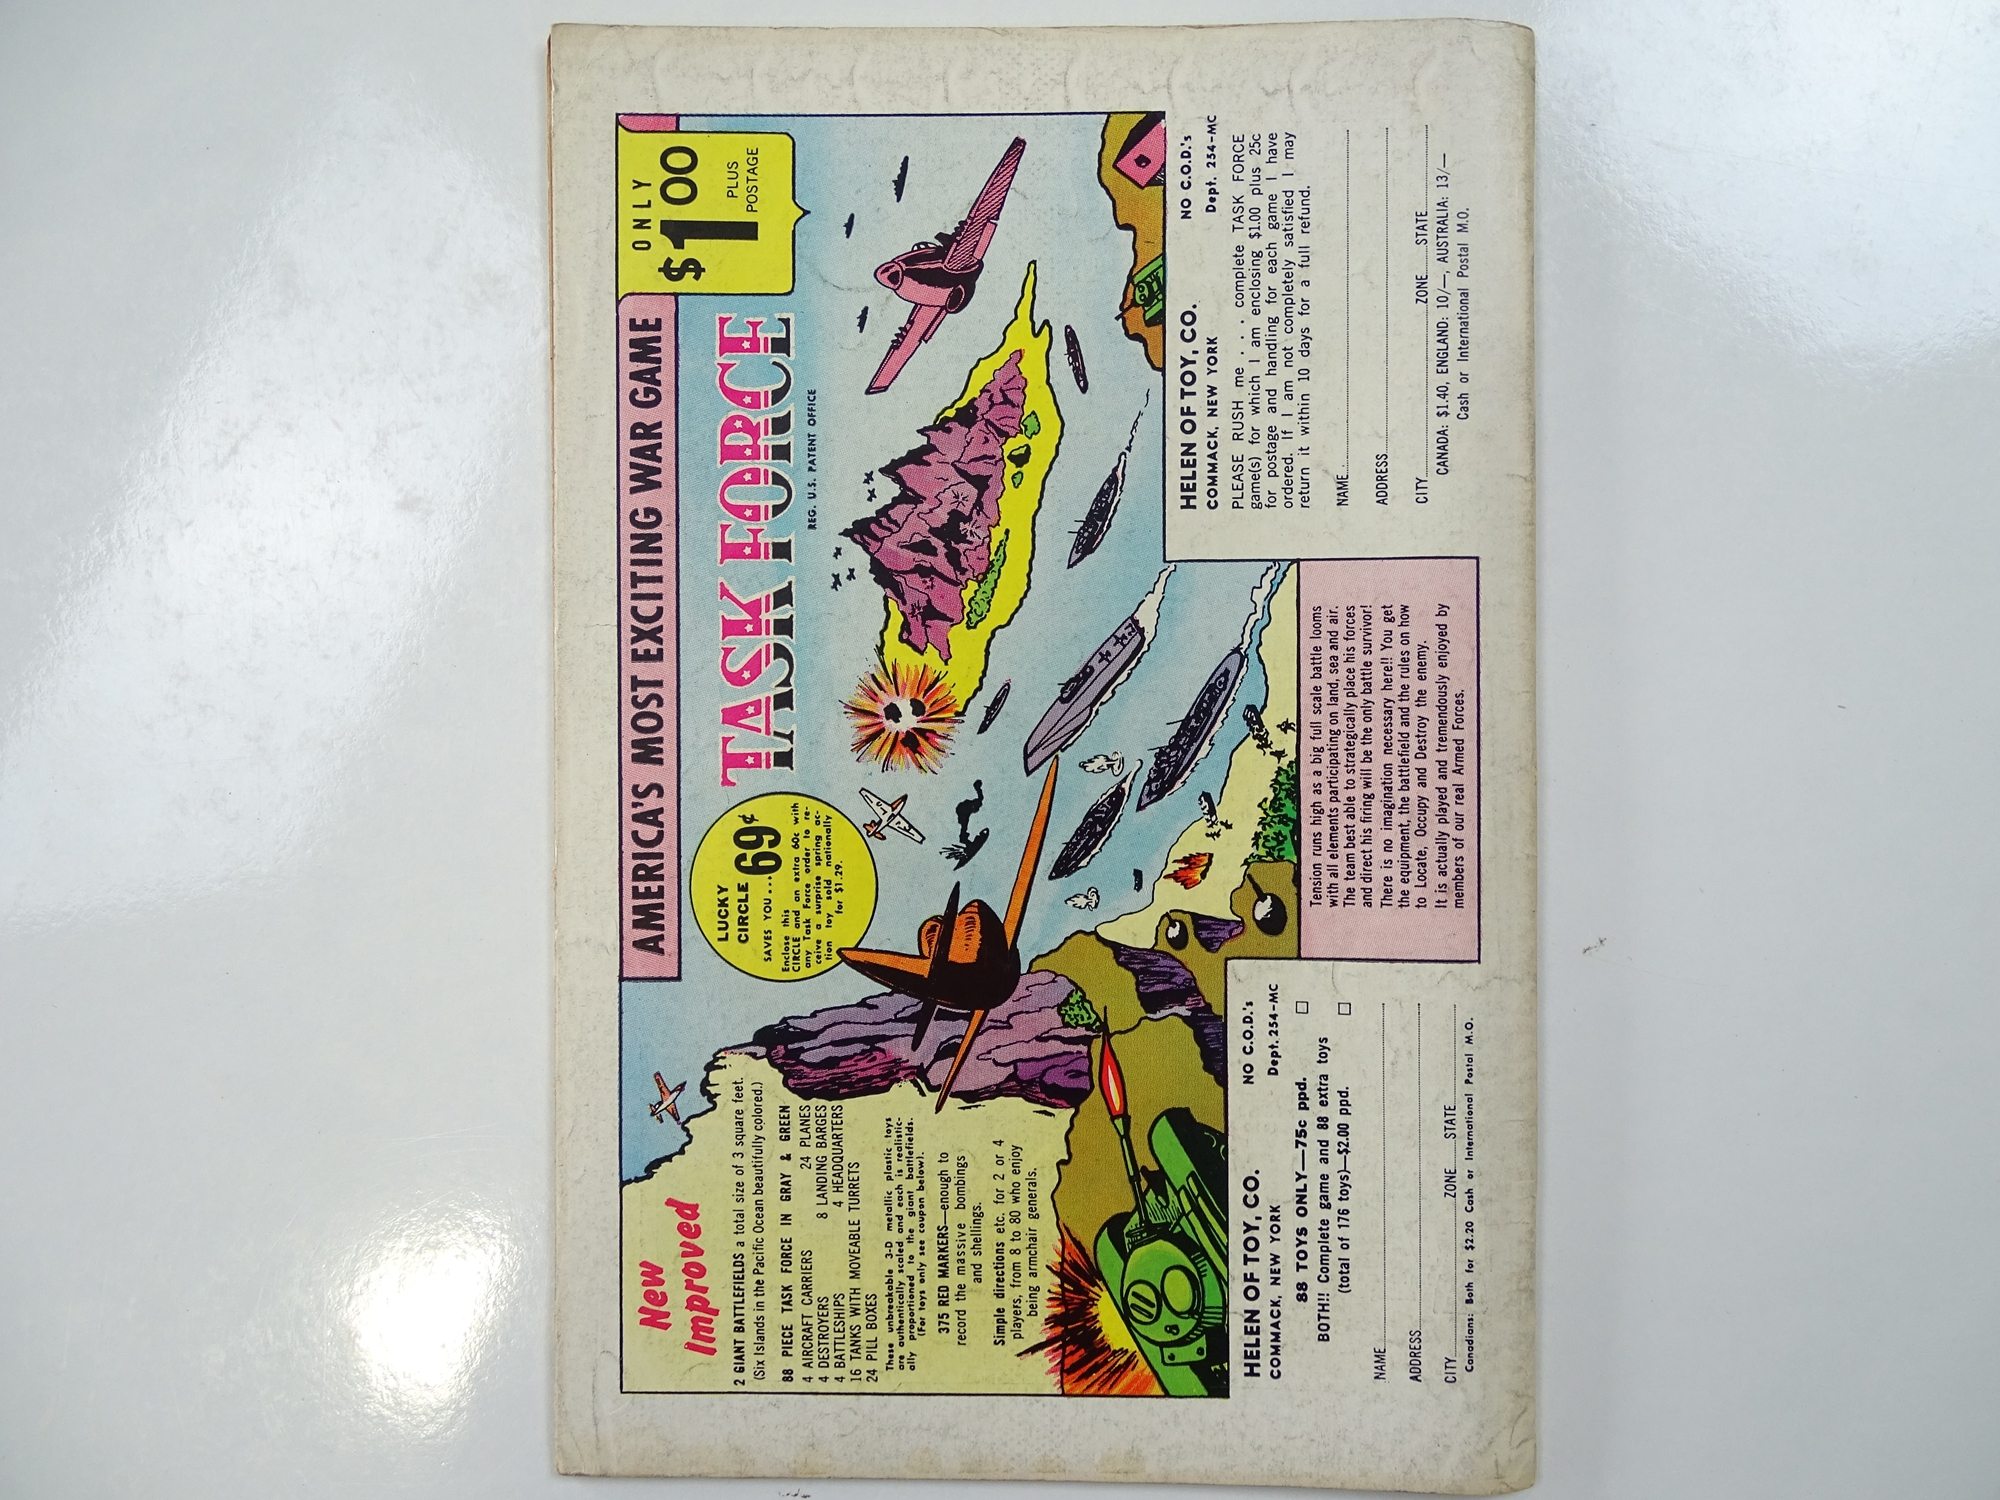 DETECTIVE COMICS: BATMAN #341 - (1965 - DC - UK Cover Price) - Joker appearance - Carmine - Image 2 of 6